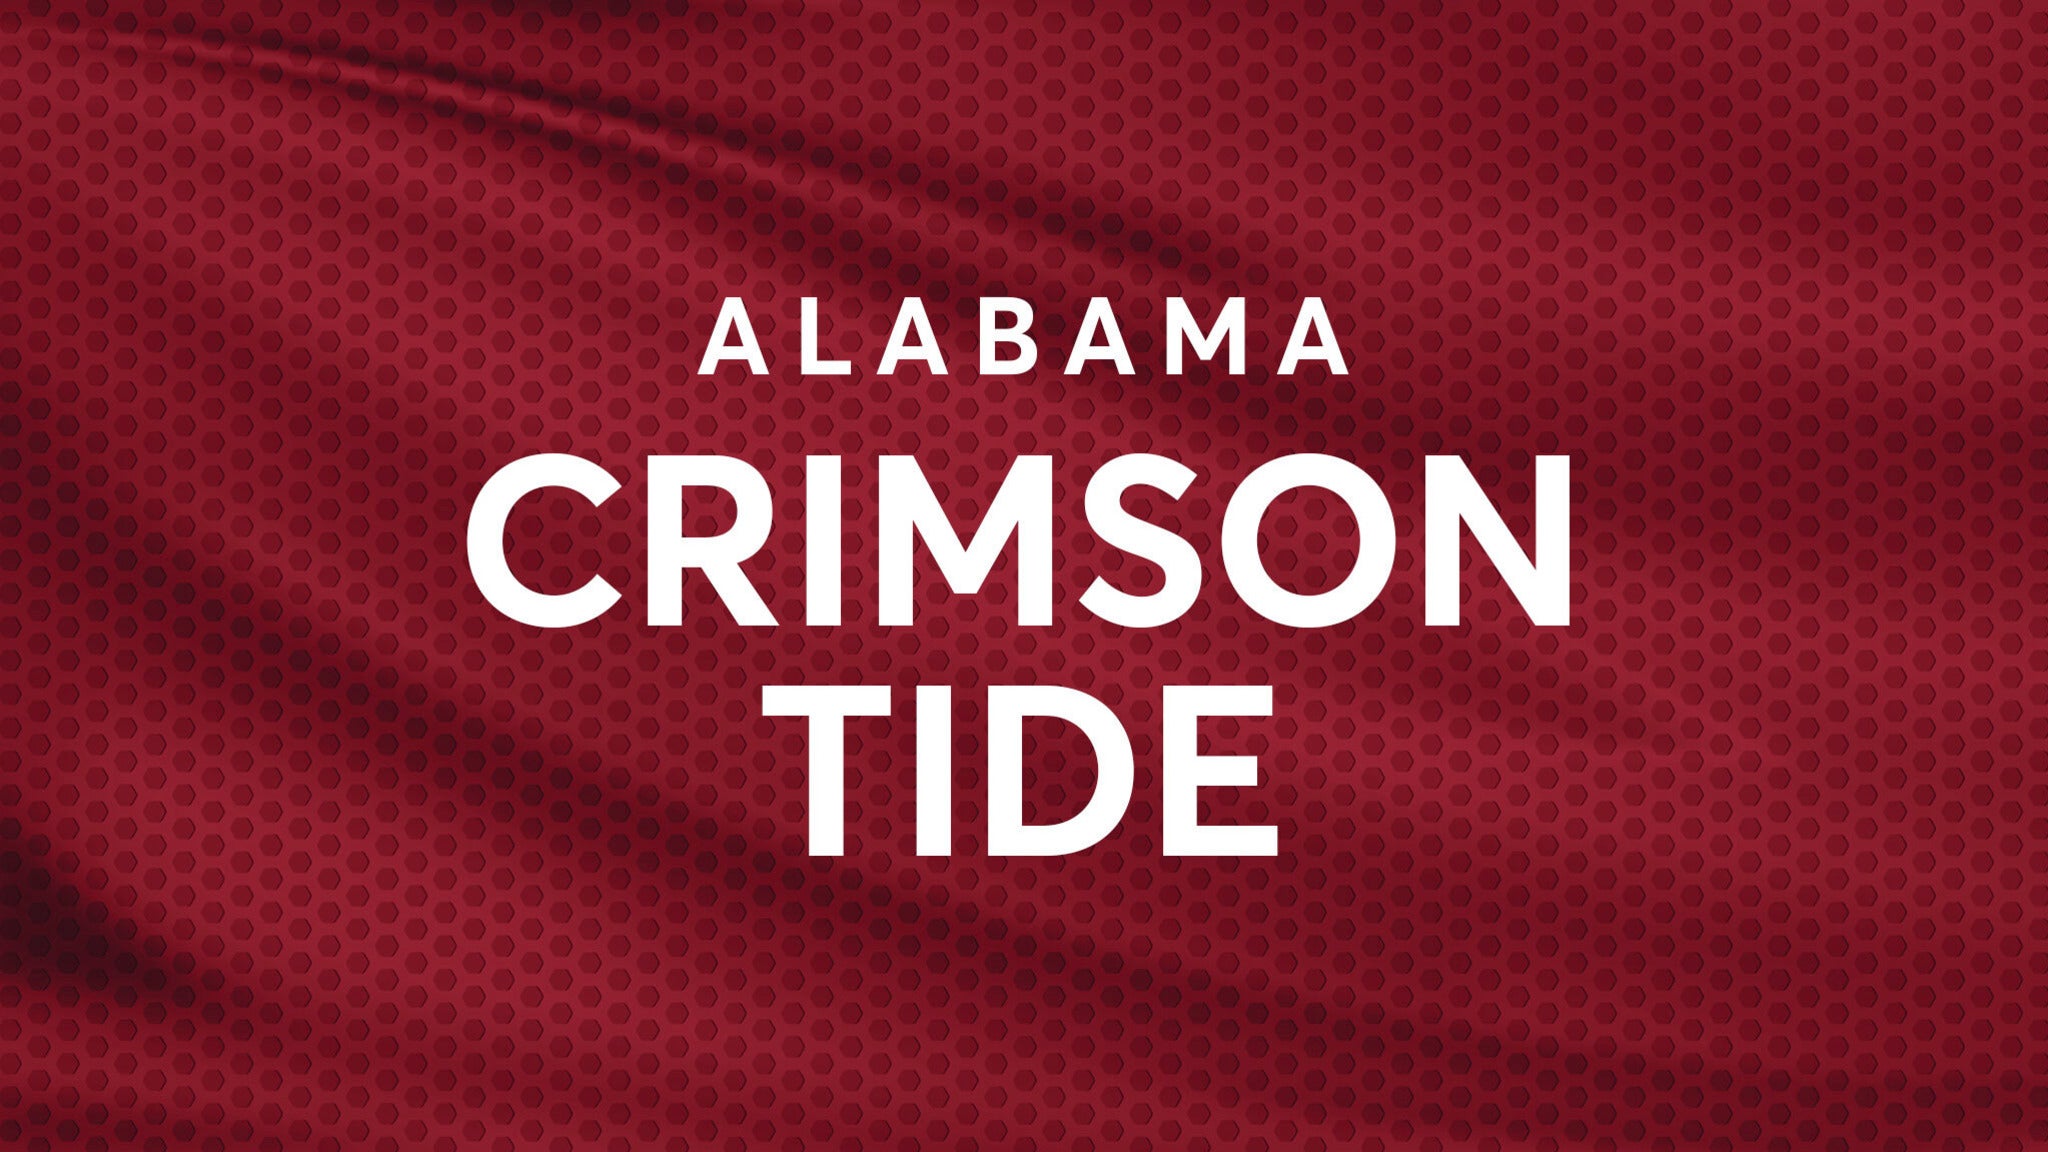 Alabama Crimson Tide Womens Soccer presale information on freepresalepasswords.com